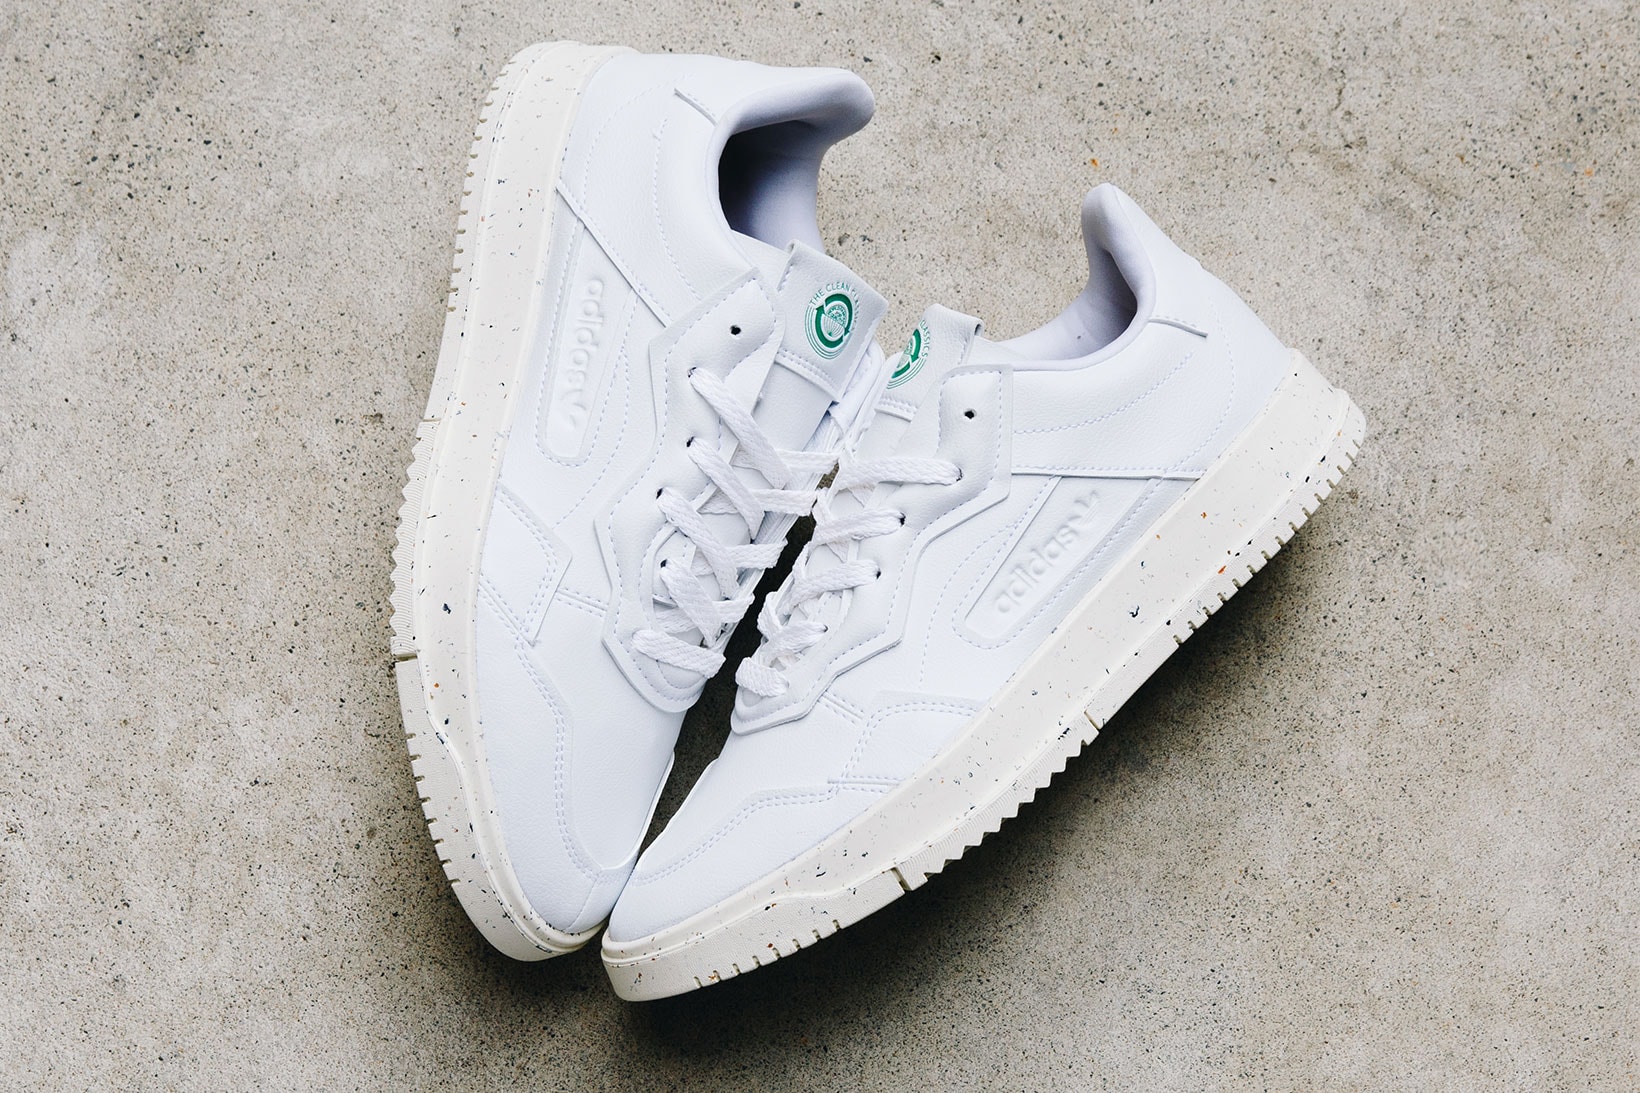 adidas originals sc premiere sustainable vegan minimal all white sneakers release price